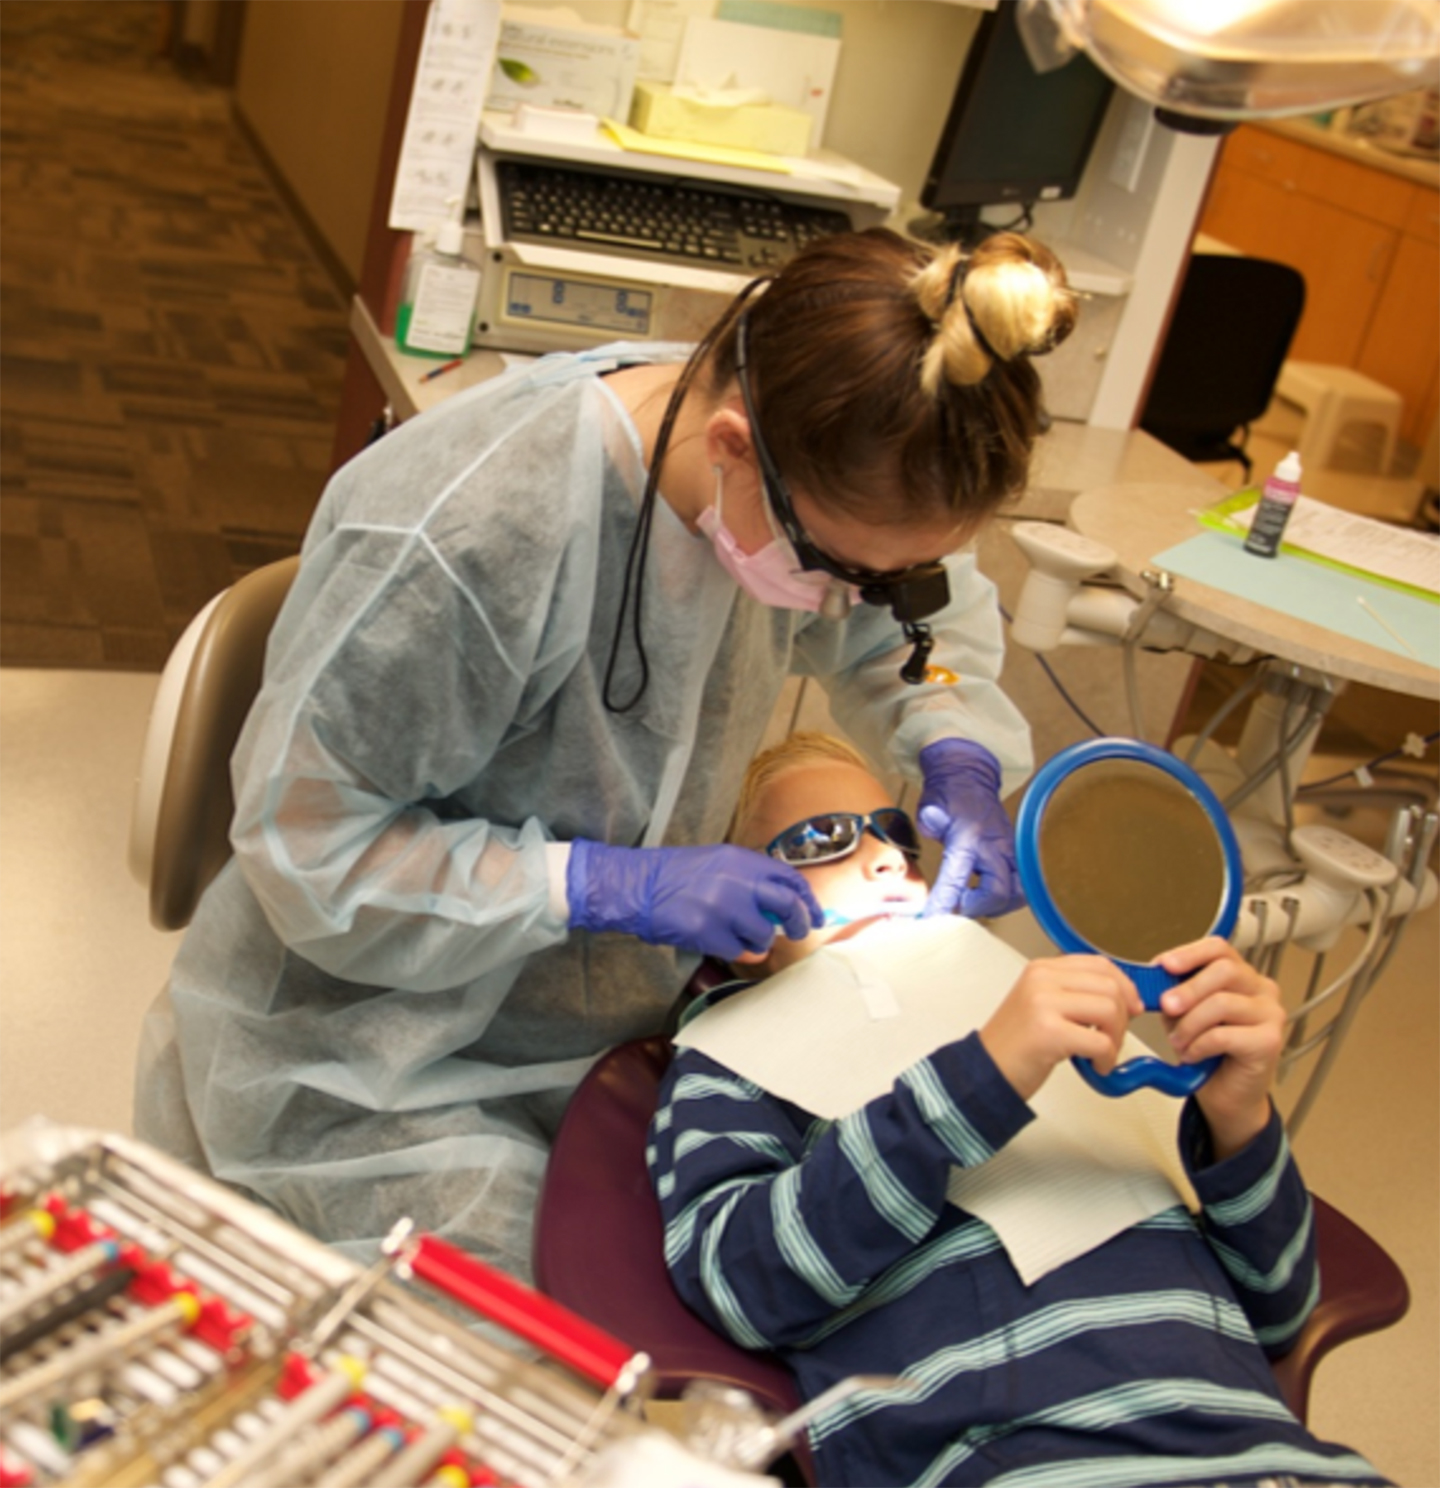 Dental hygiene program provides reduced rate dental cleanings